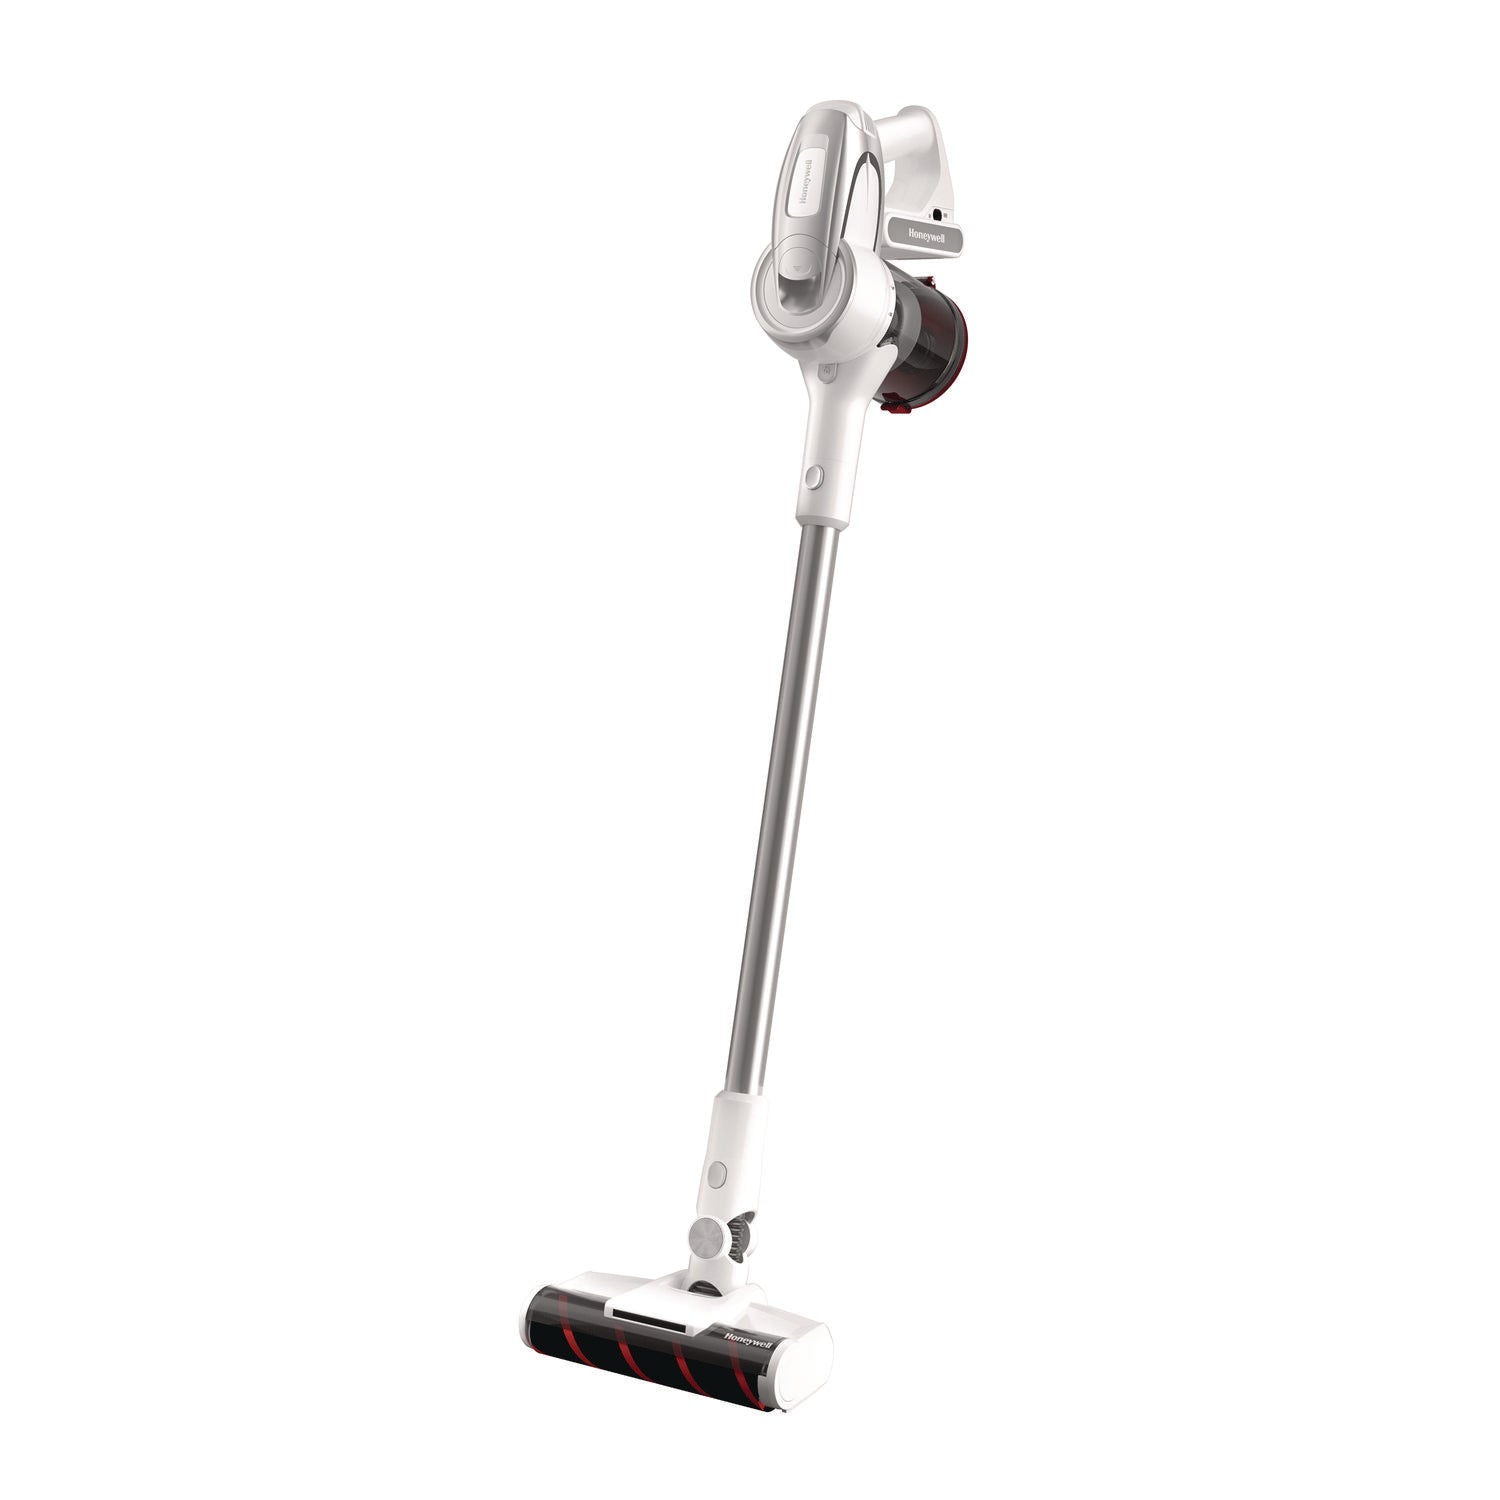 aeromax-elite-vc10-cordless-vacuum-87-cleaning-path-white_hwlhvc10amewt01 - 1